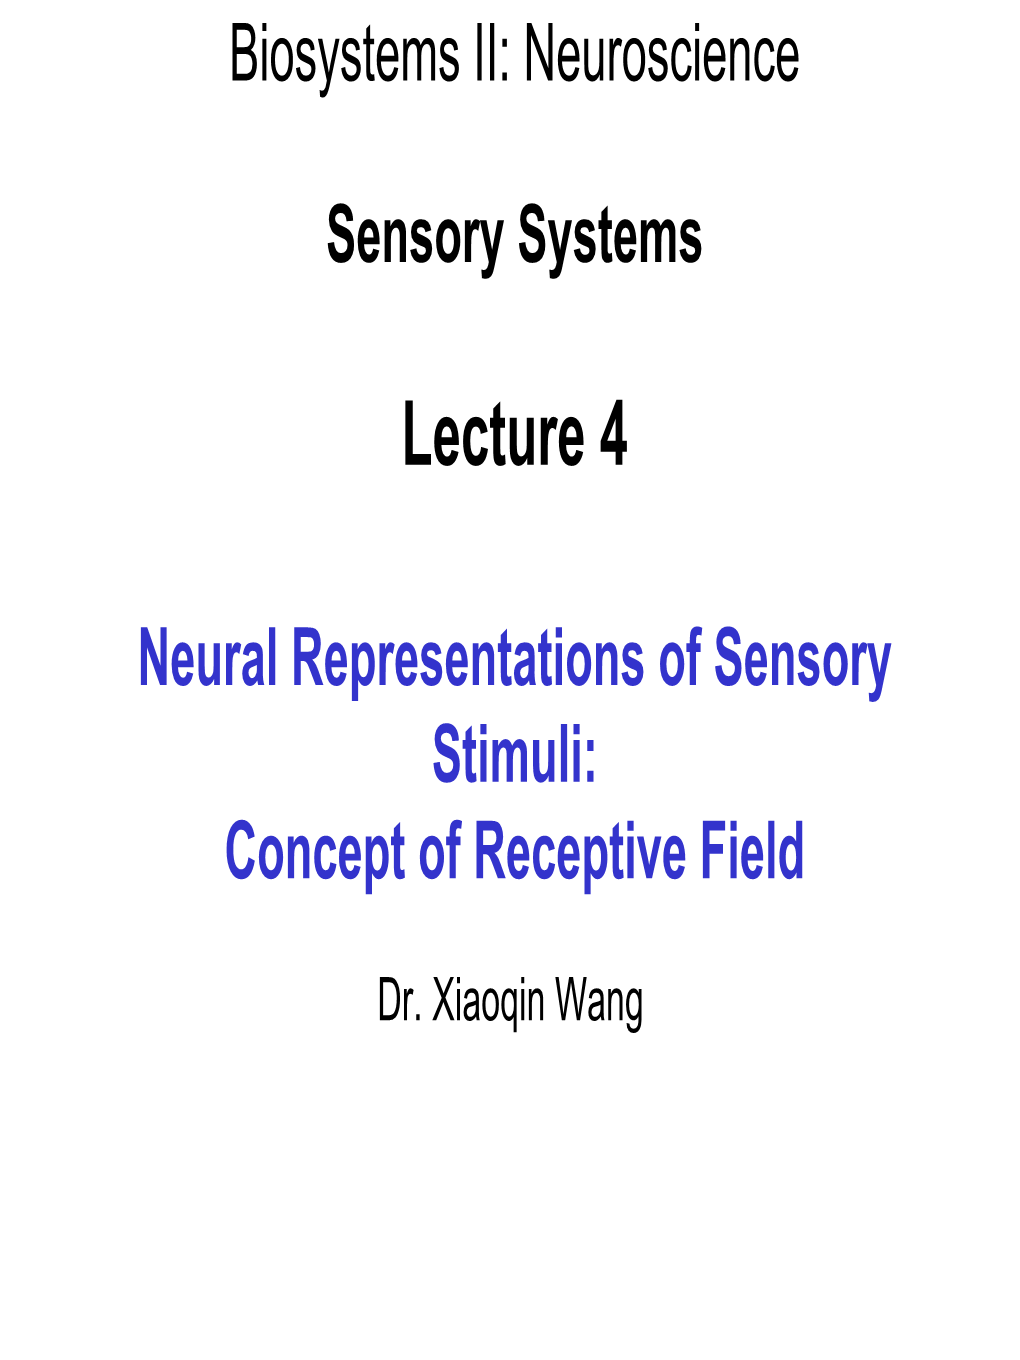 Neural Representations of Sensory Stimuli: Concept of Receptive Field